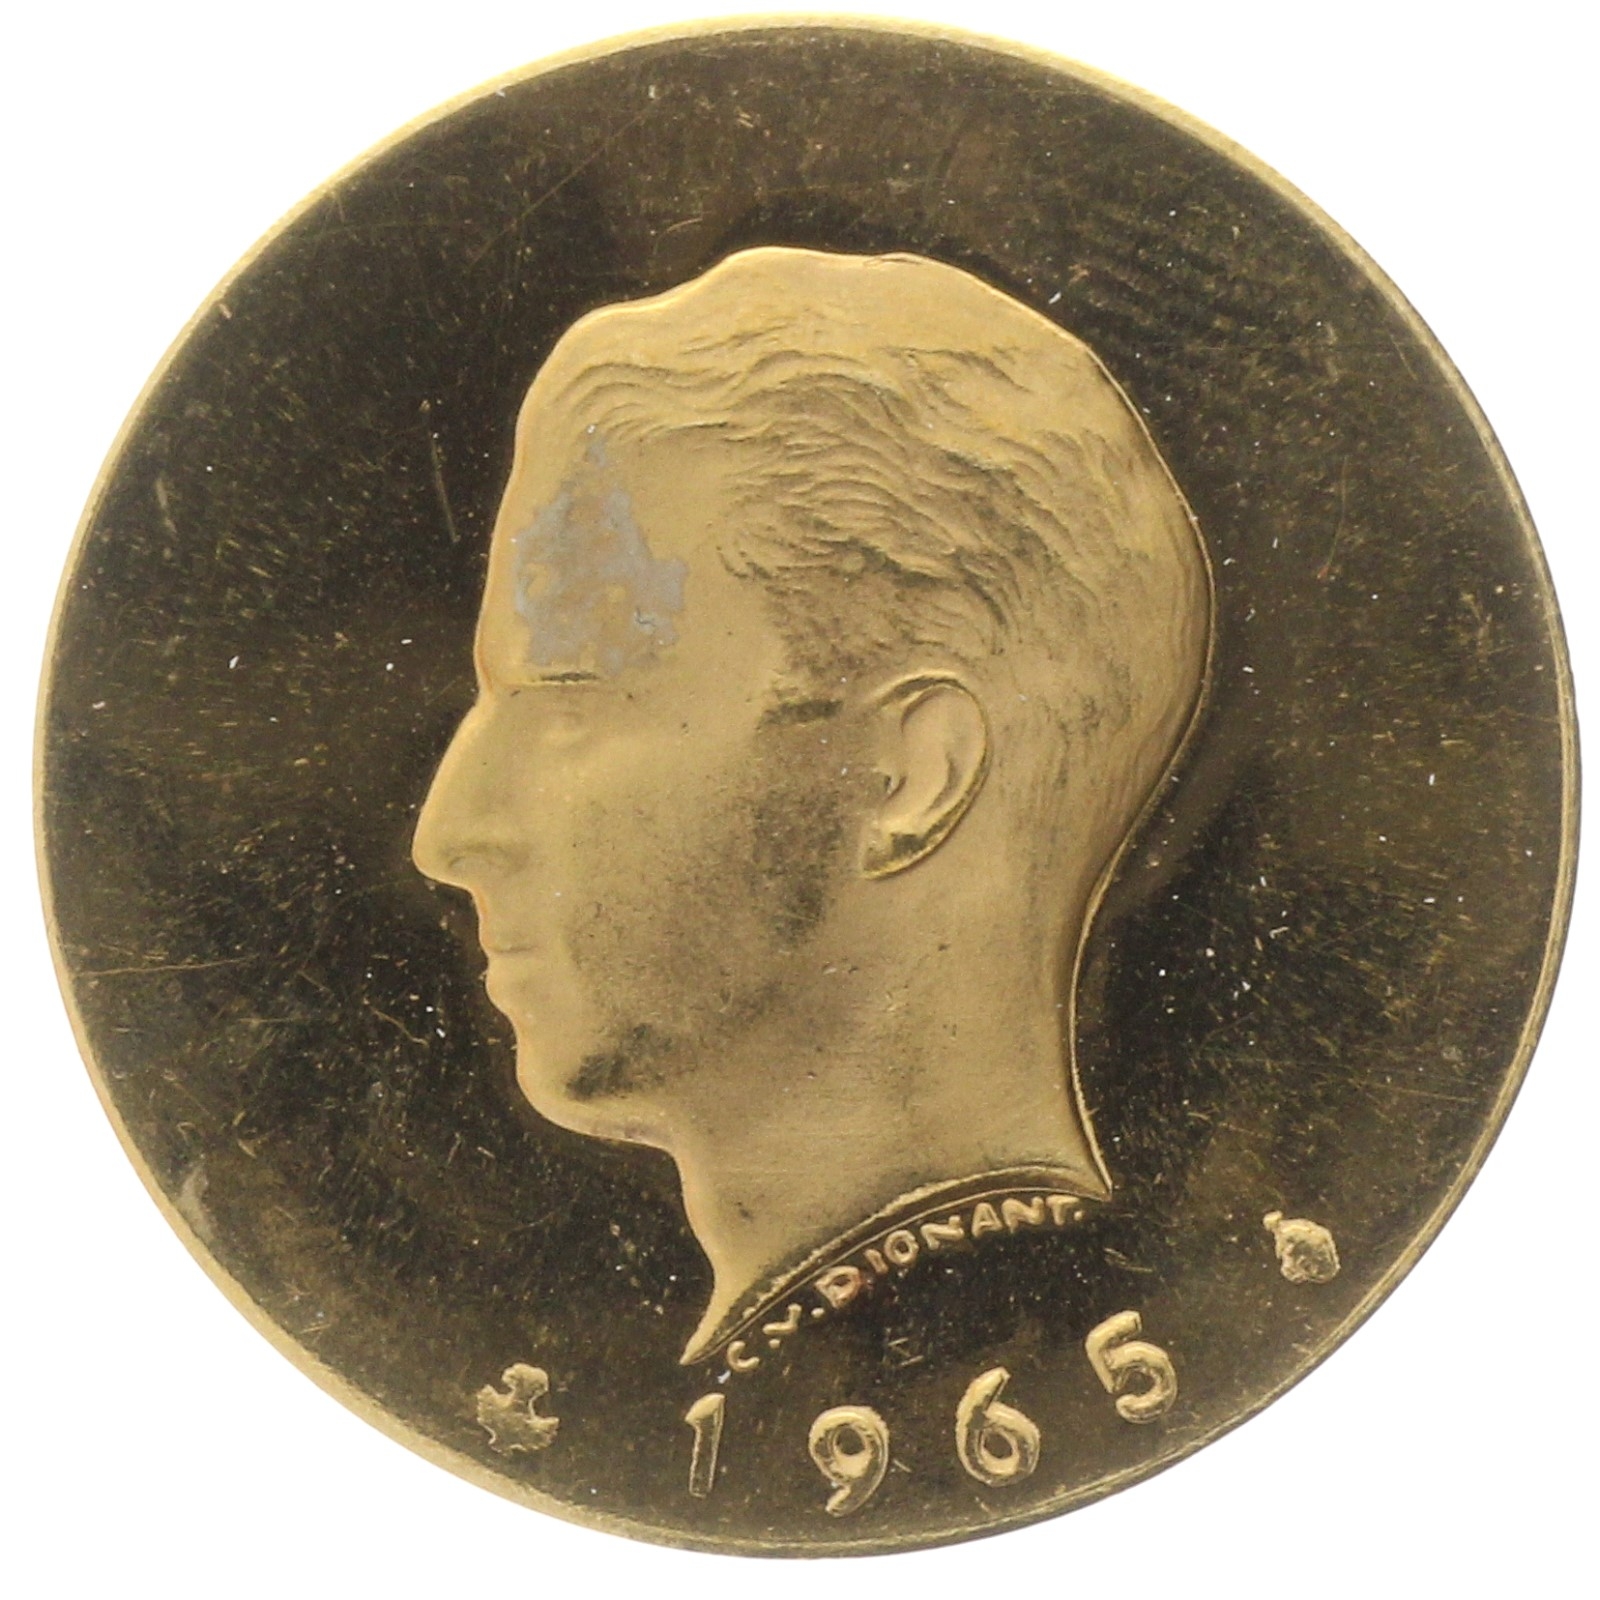 Belgium - Millenium of Minting in Brussels - 1965 - medal